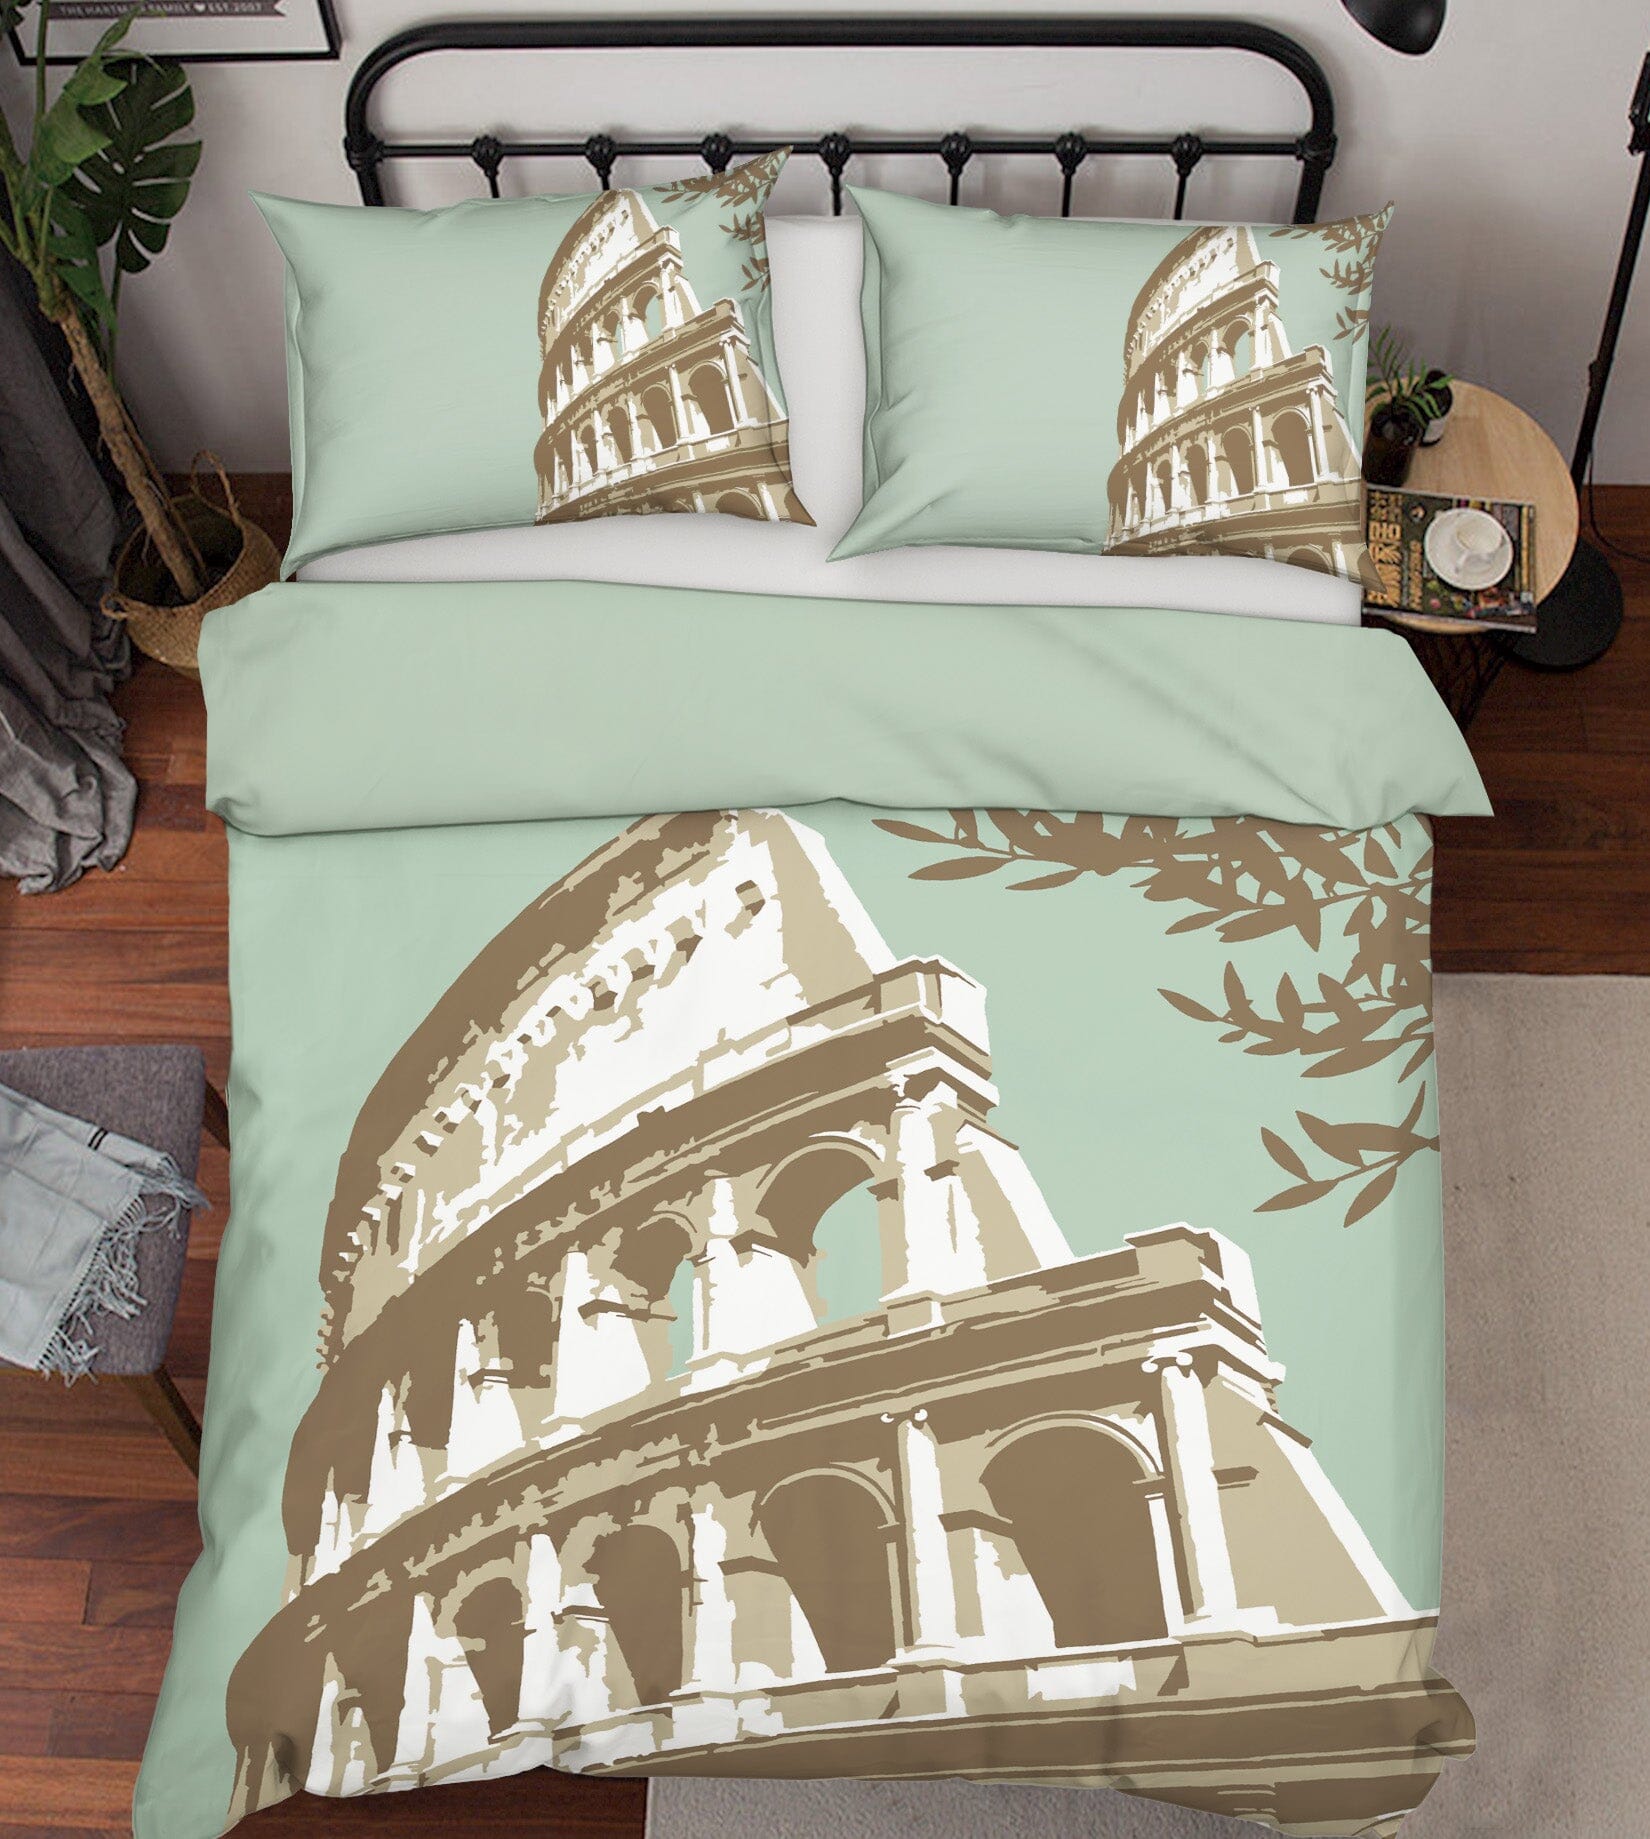 3D Coloseum Rome 2014 Steve Read Bedding Bed Pillowcases Quilt Quiet Covers AJ Creativity Home 